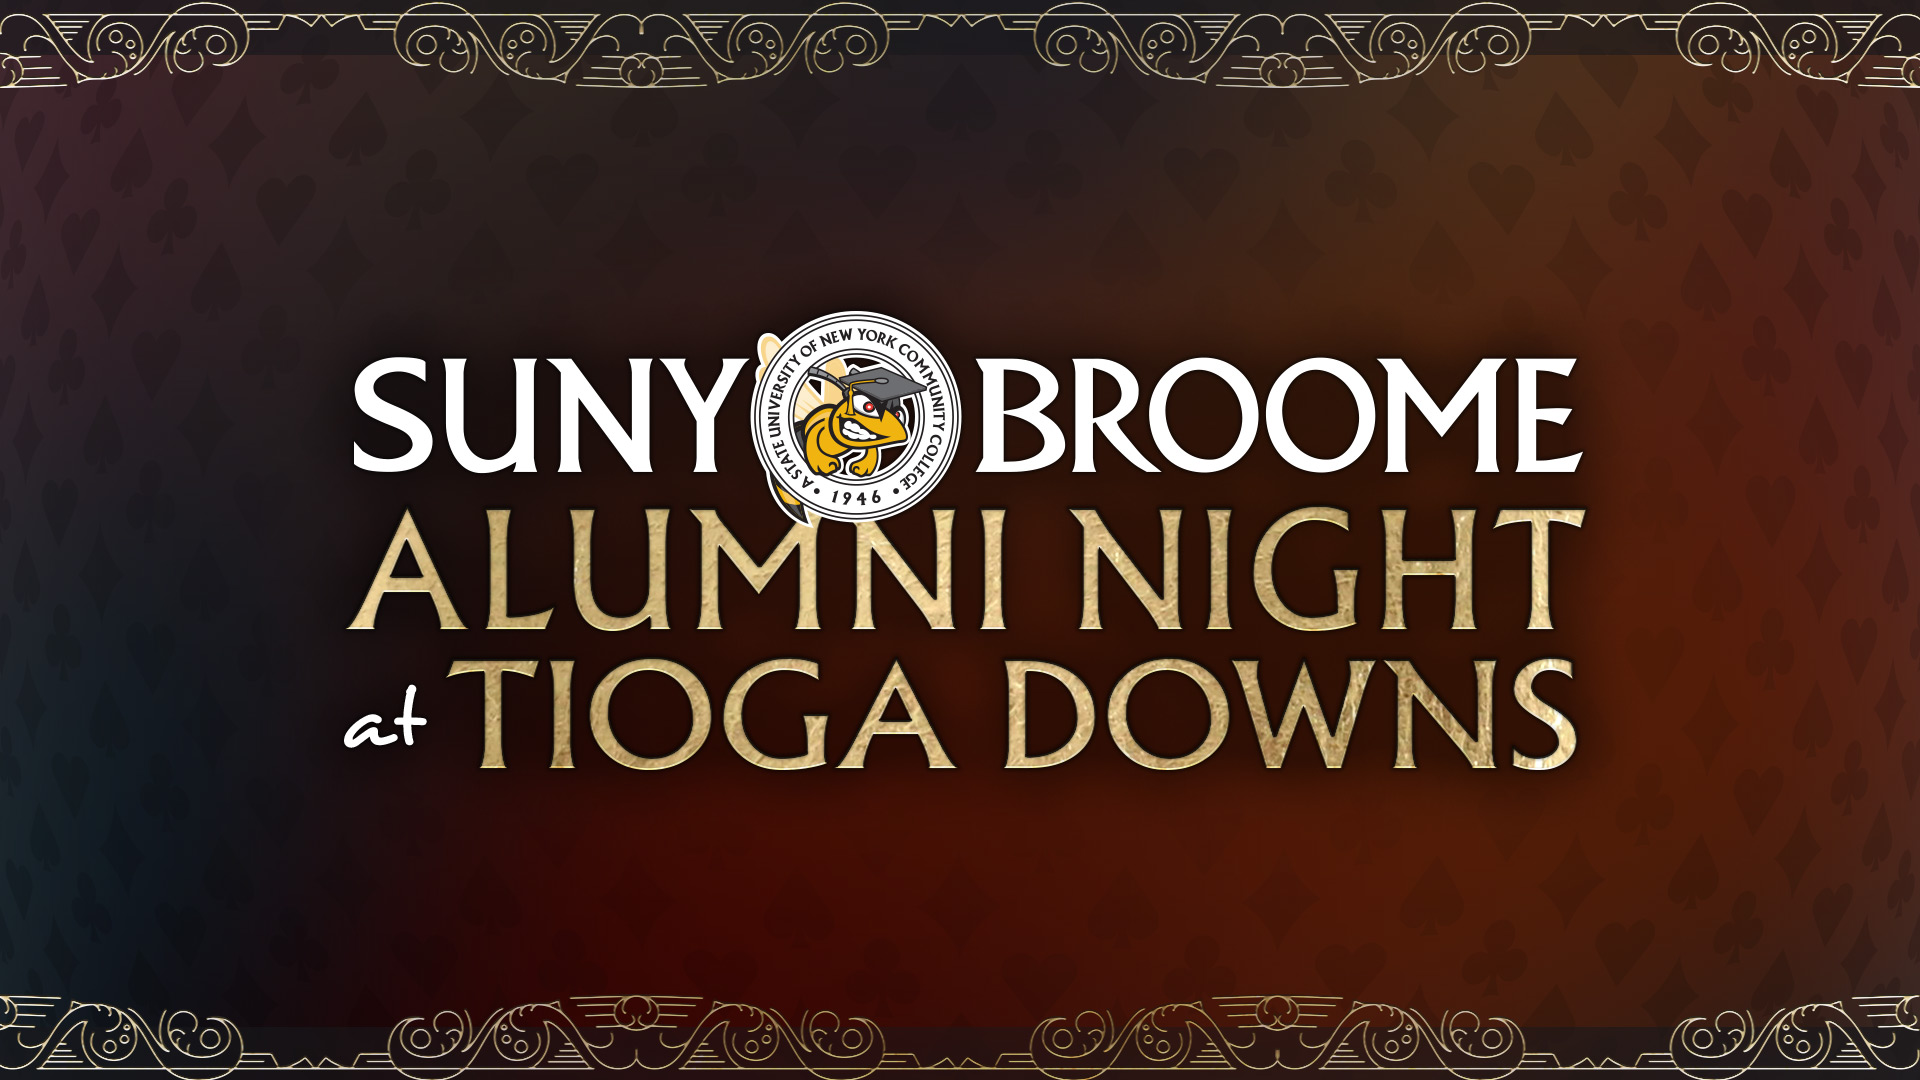 SUNY Broome Alumni Night at Tioga Downs